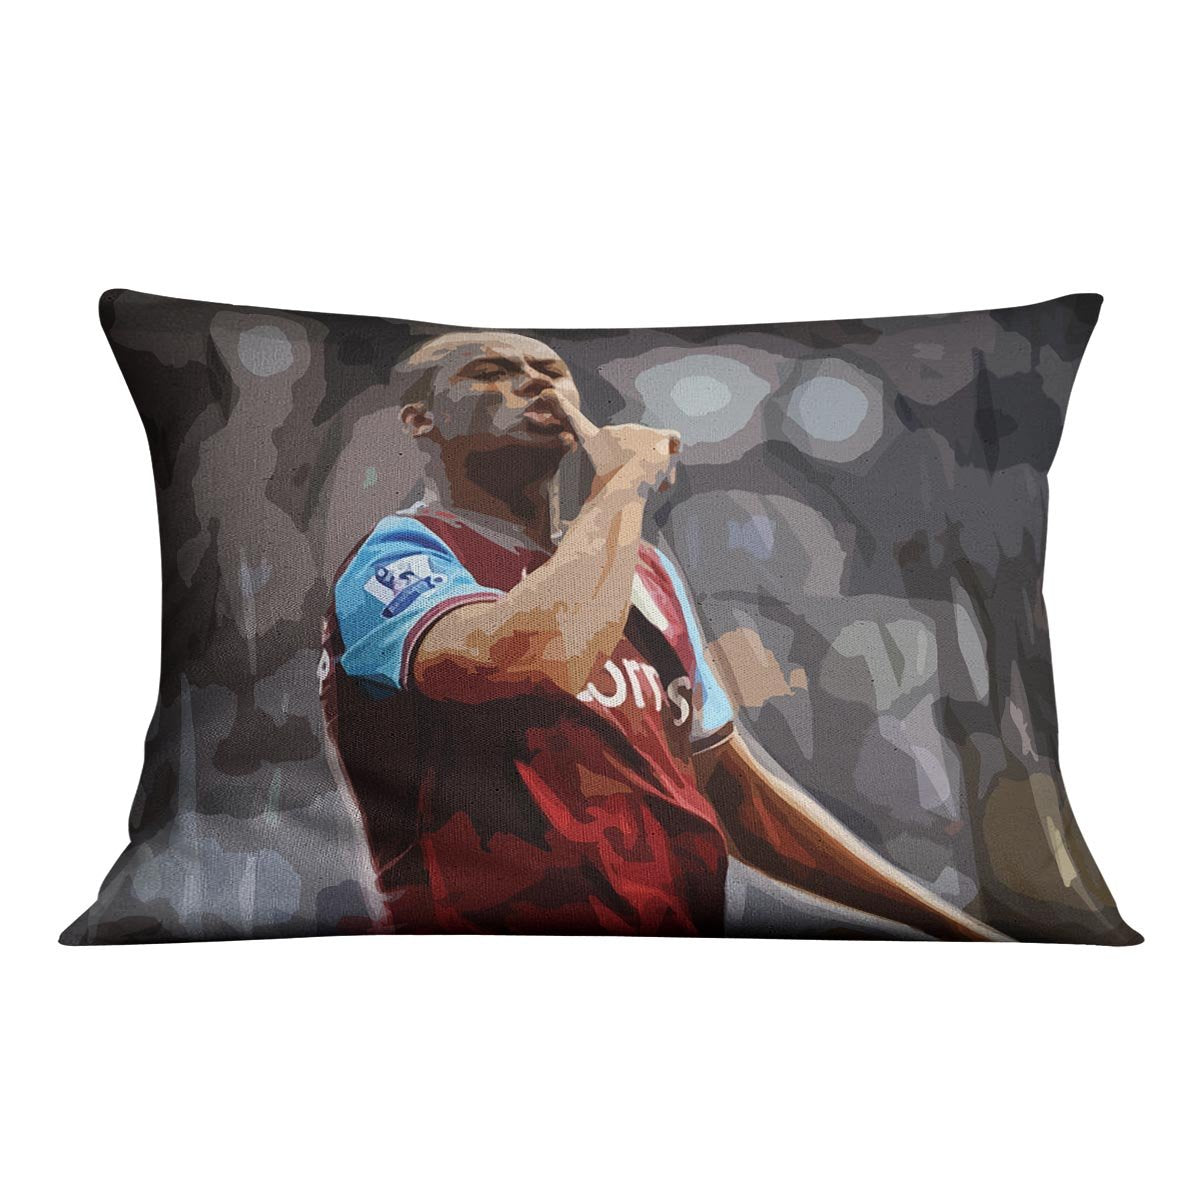 Agbonlahor Aston Villa Cushion